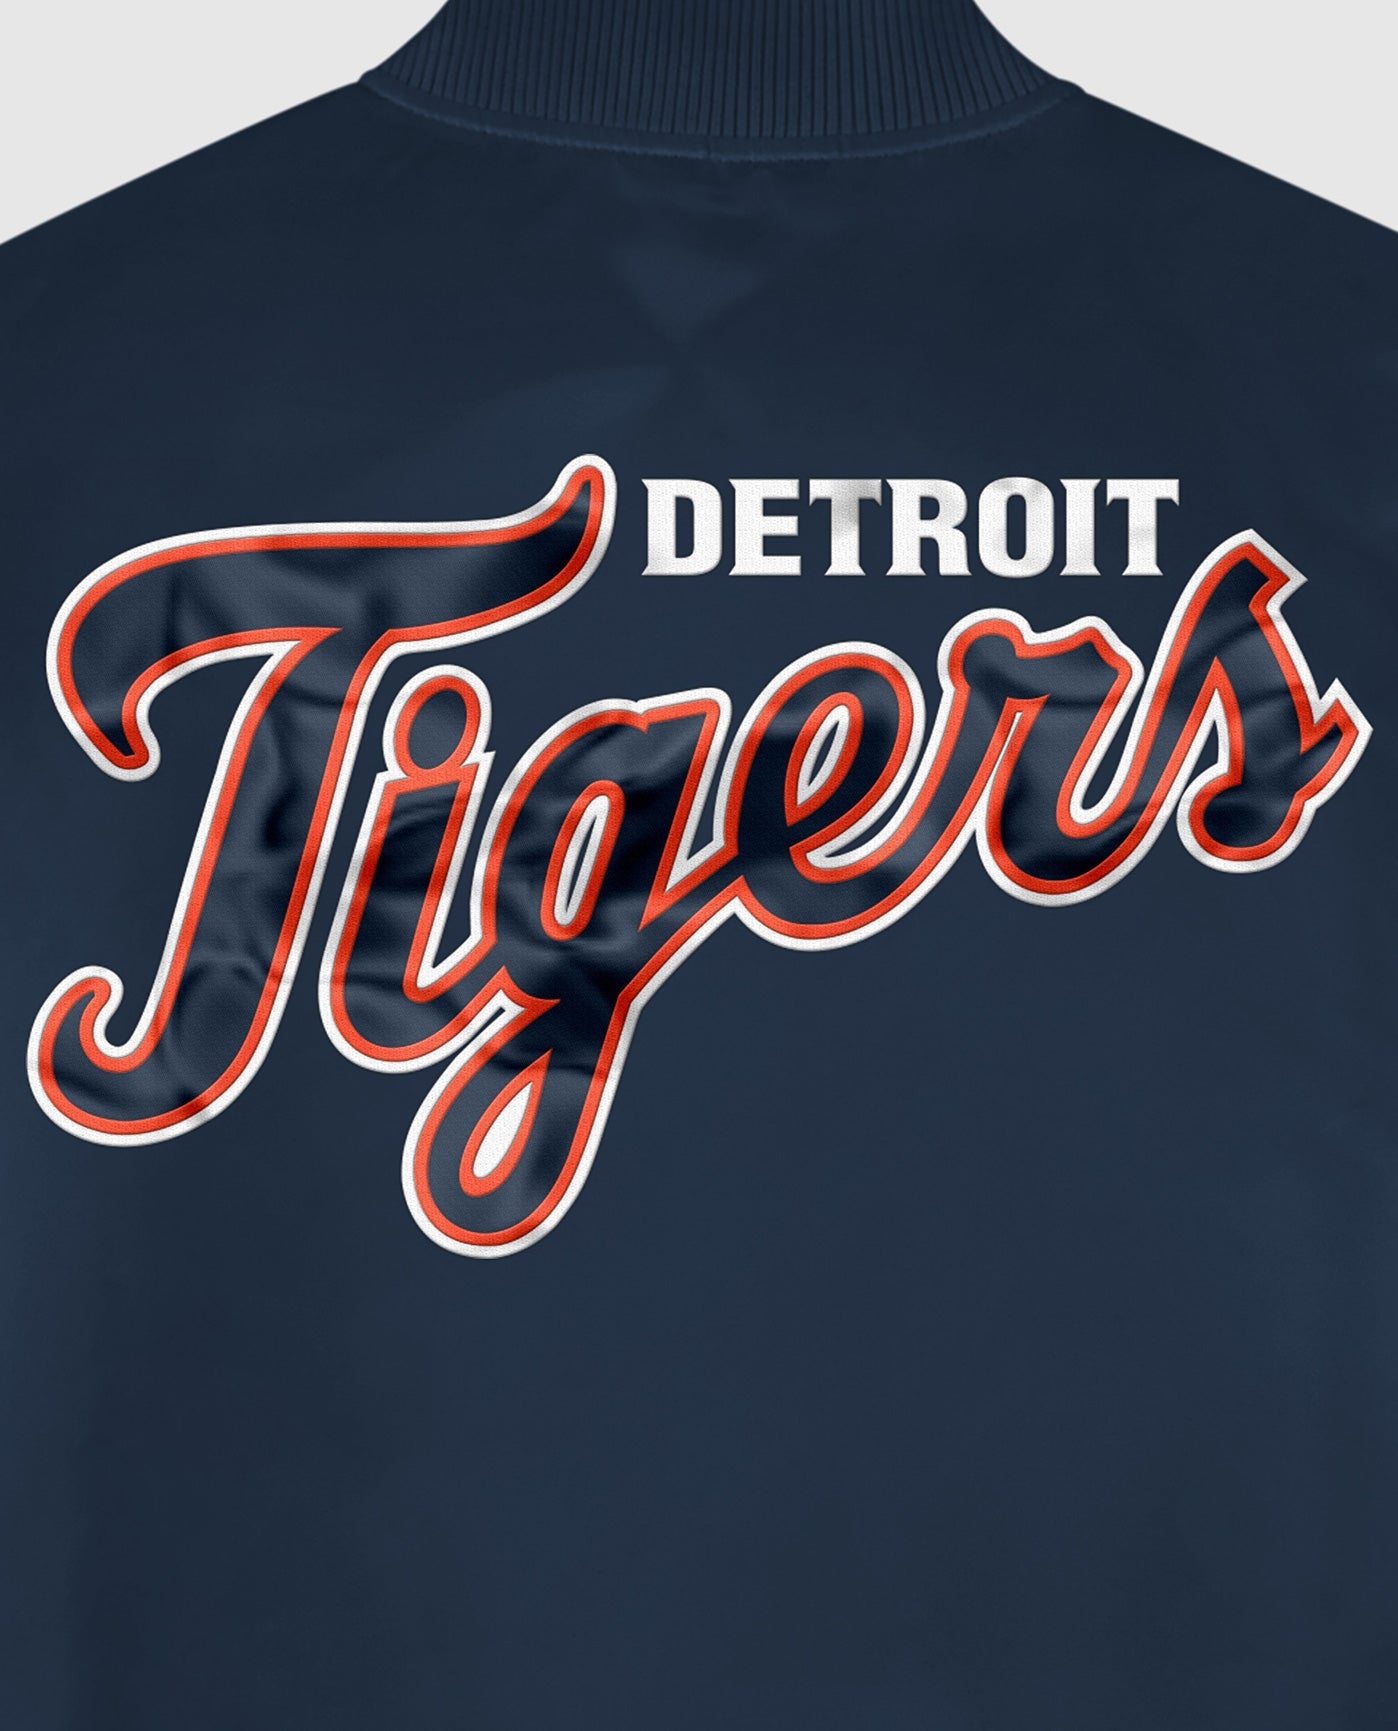 Detroit tigers vintage logo refresh